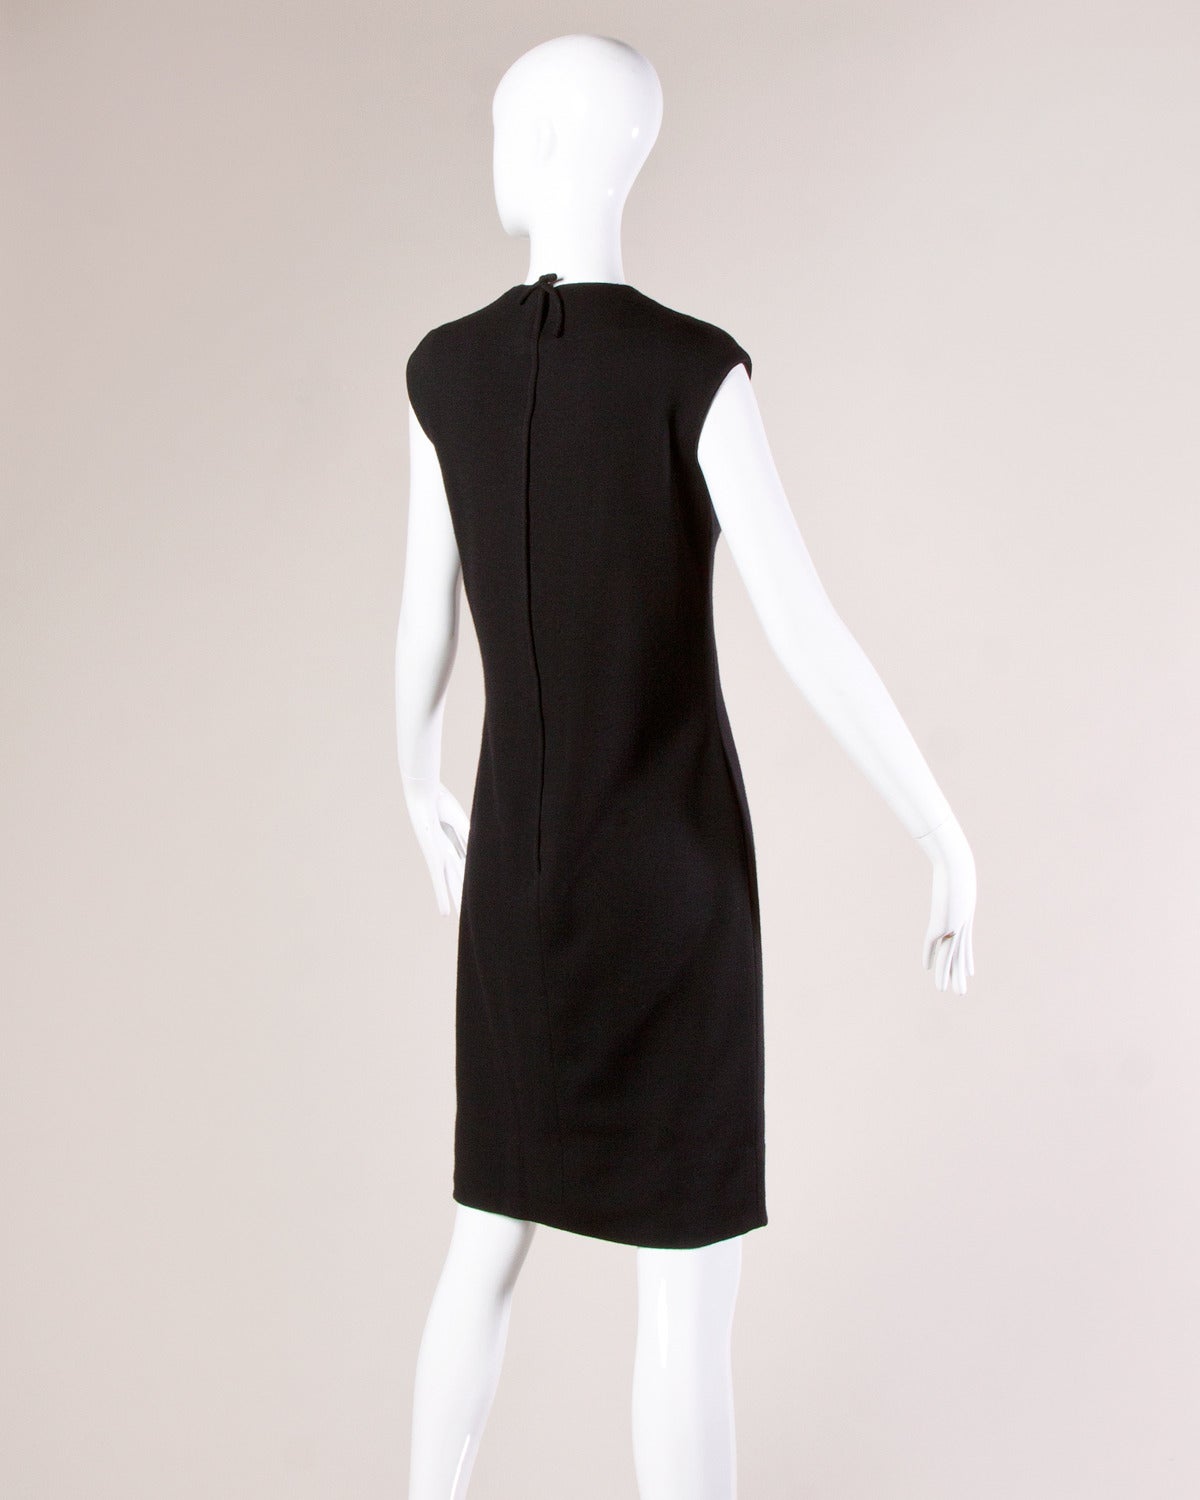 Mr. Blackwell Vintage 1960s Black Wool Beaded + Rhinestone Shift Dress 1